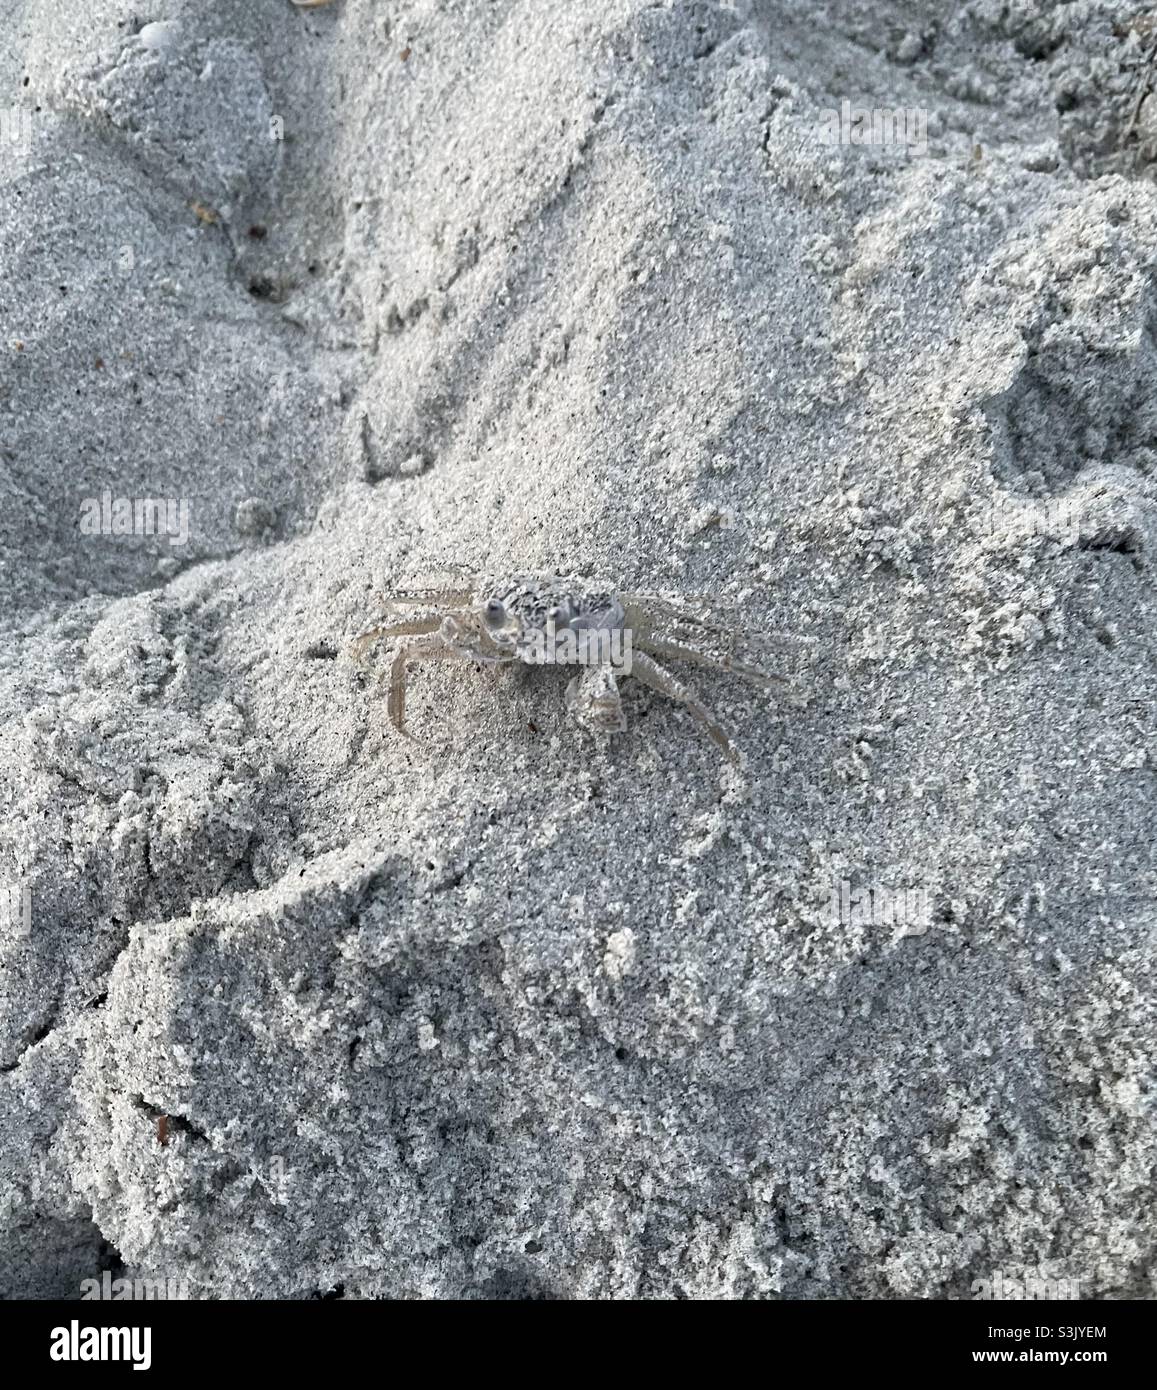 Sand crab Stock Photo